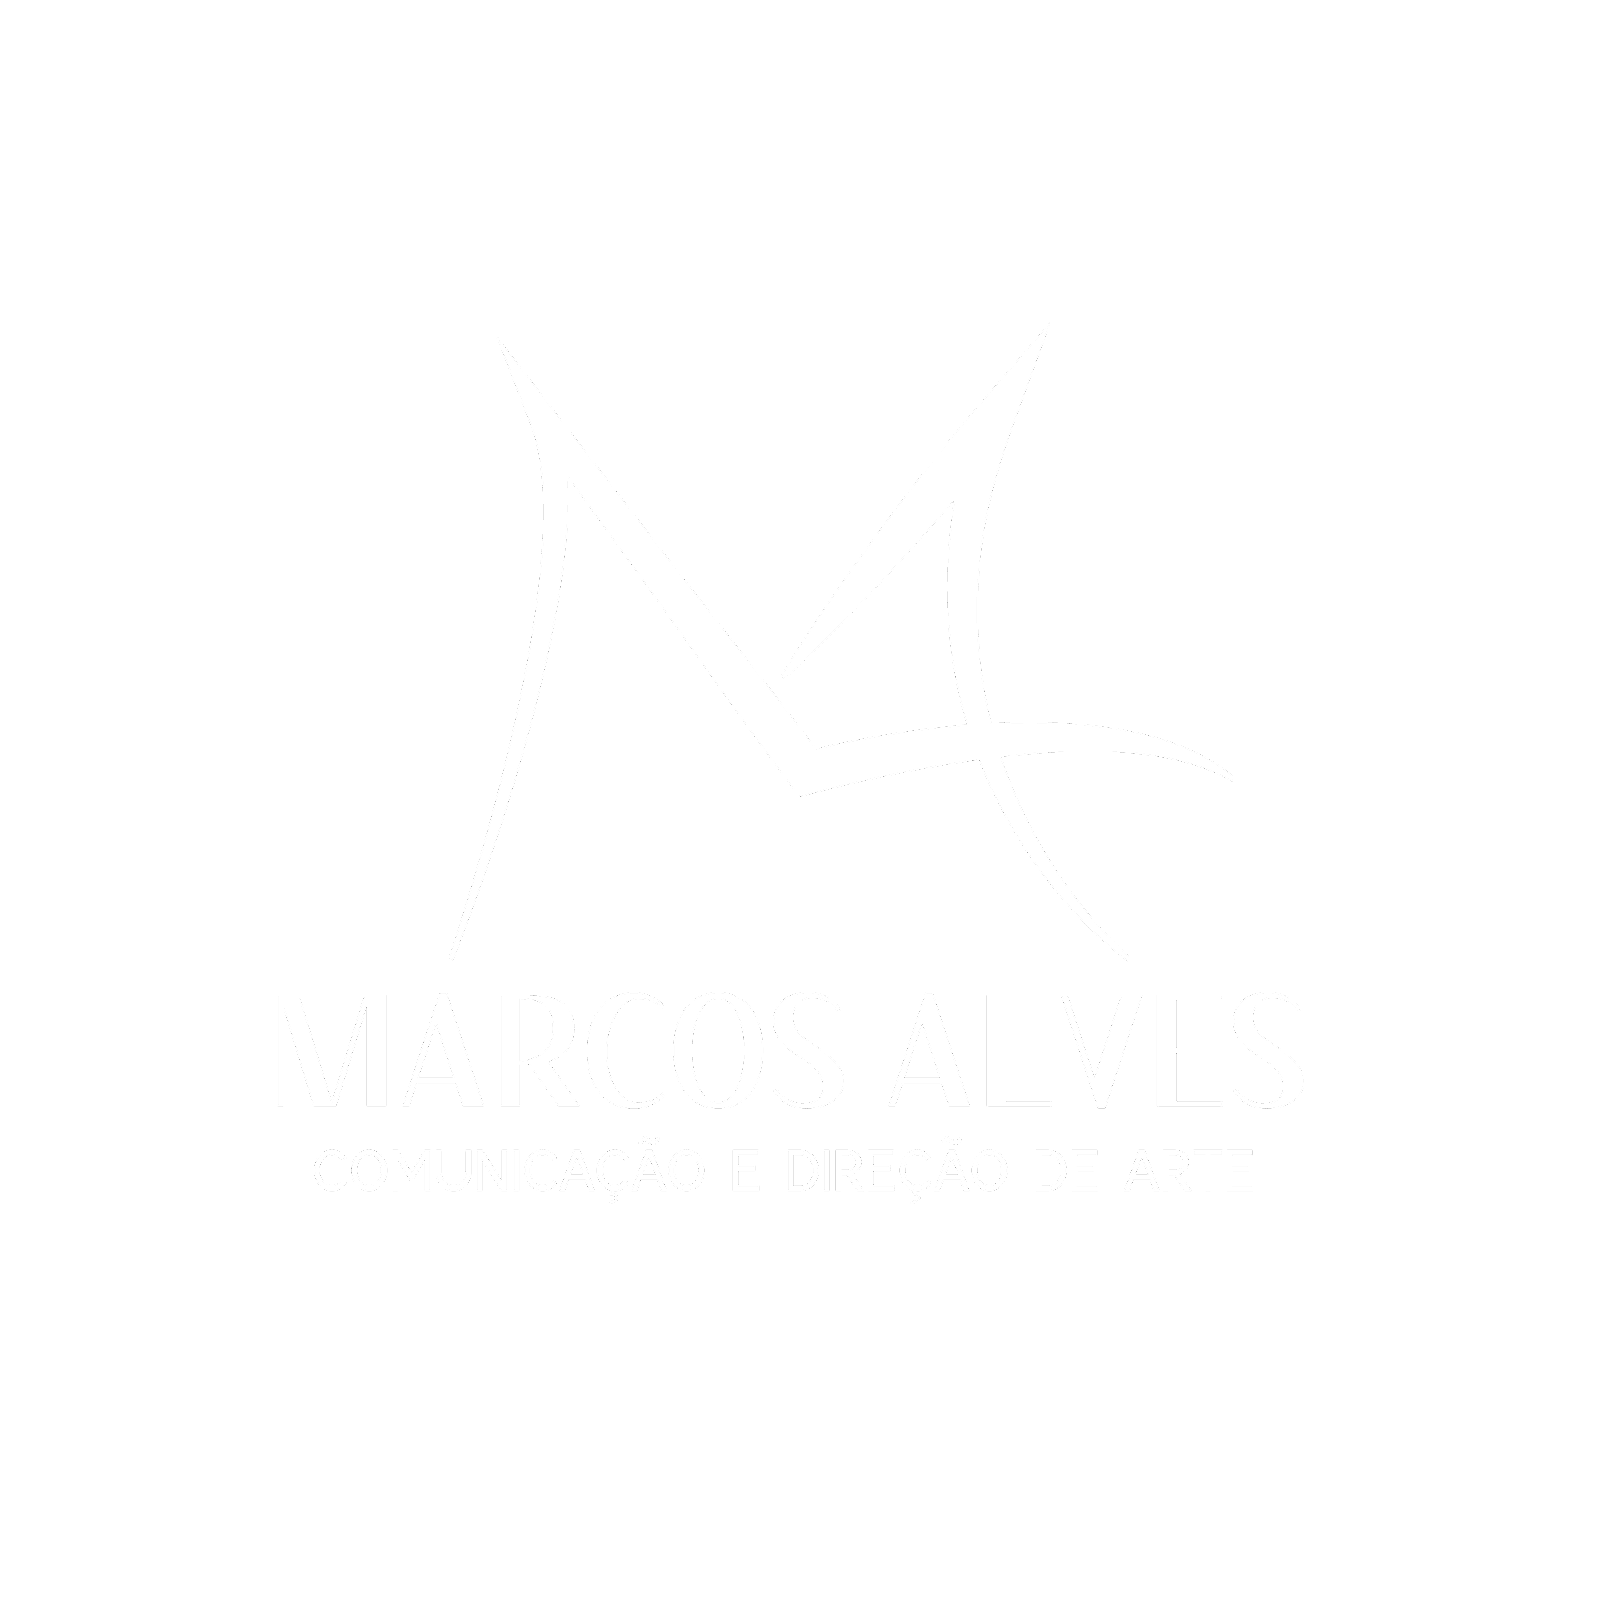 Design for Marcos